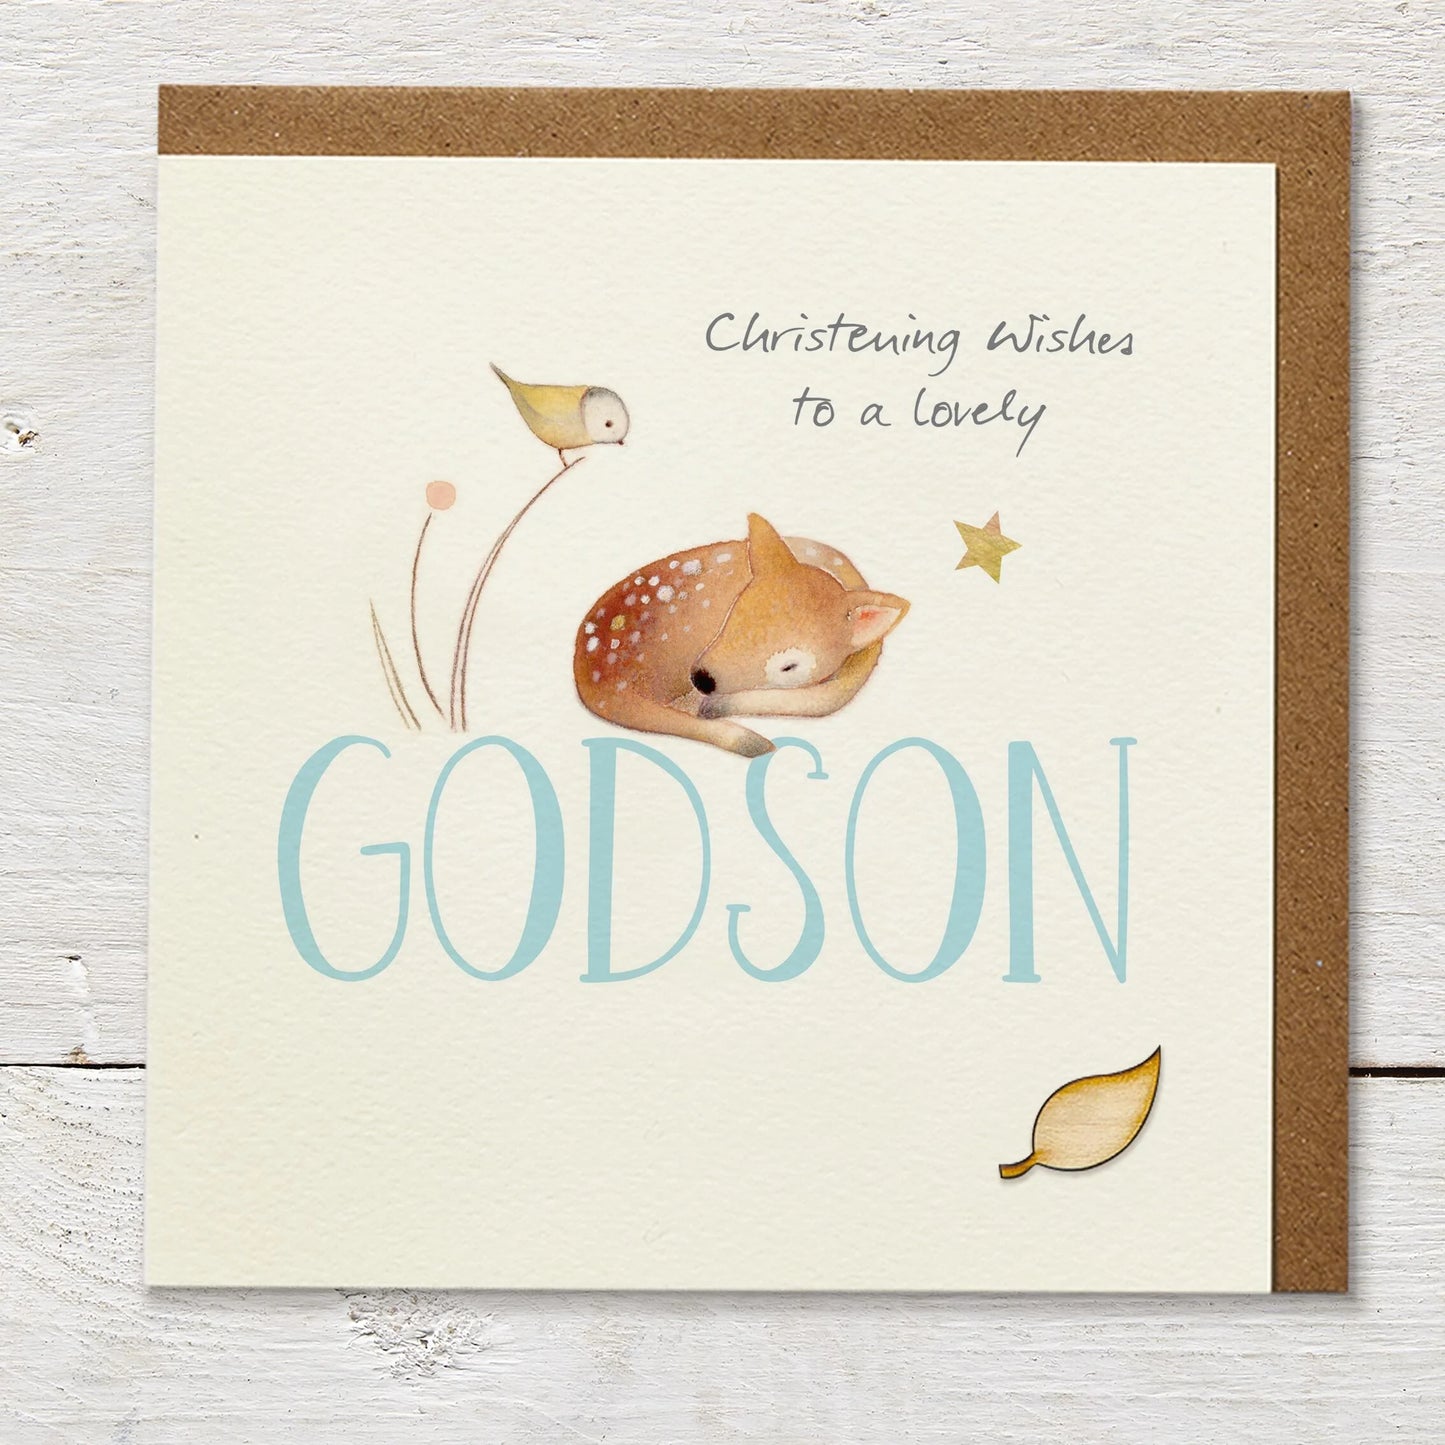 Godson Christening Greetings Card